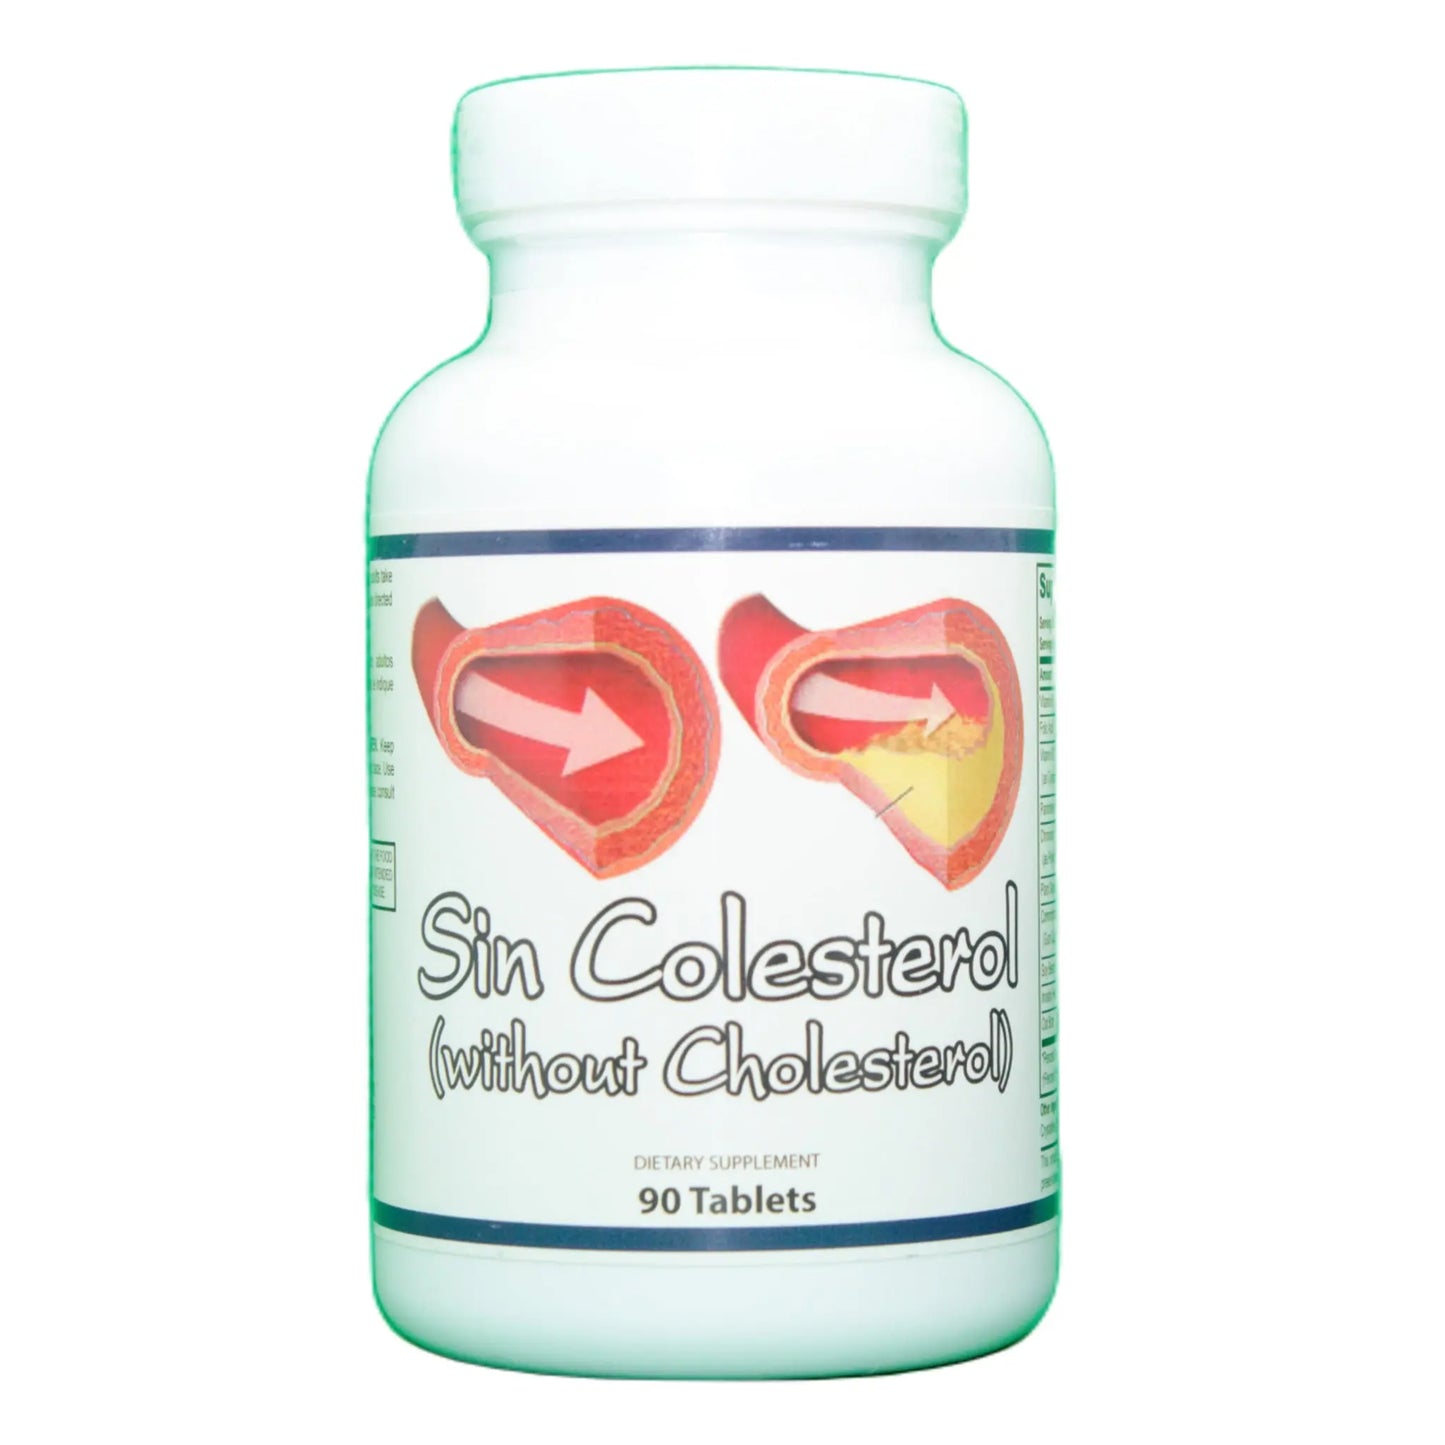 Colesterol Kit Manteniendo Tu Salud